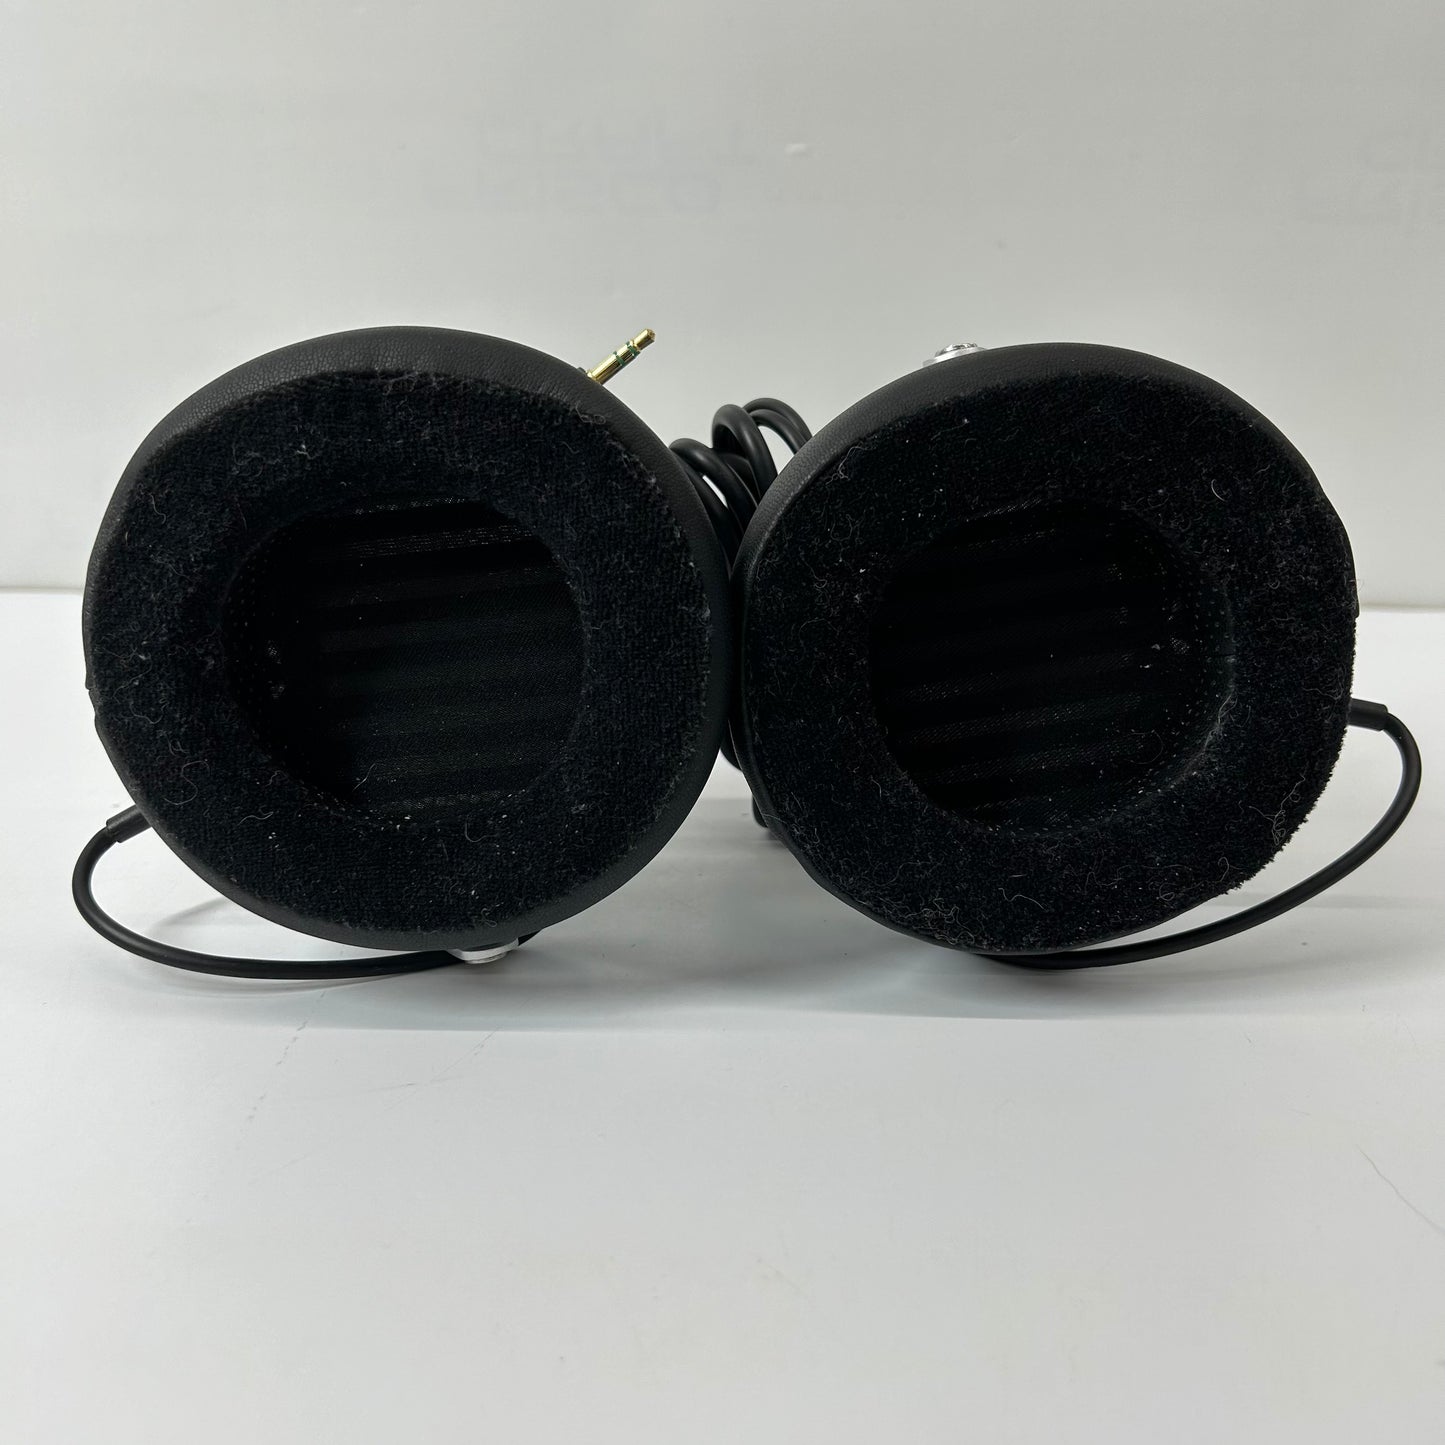 HiFiMan HE400se Wired Over-Ear Headphones Black